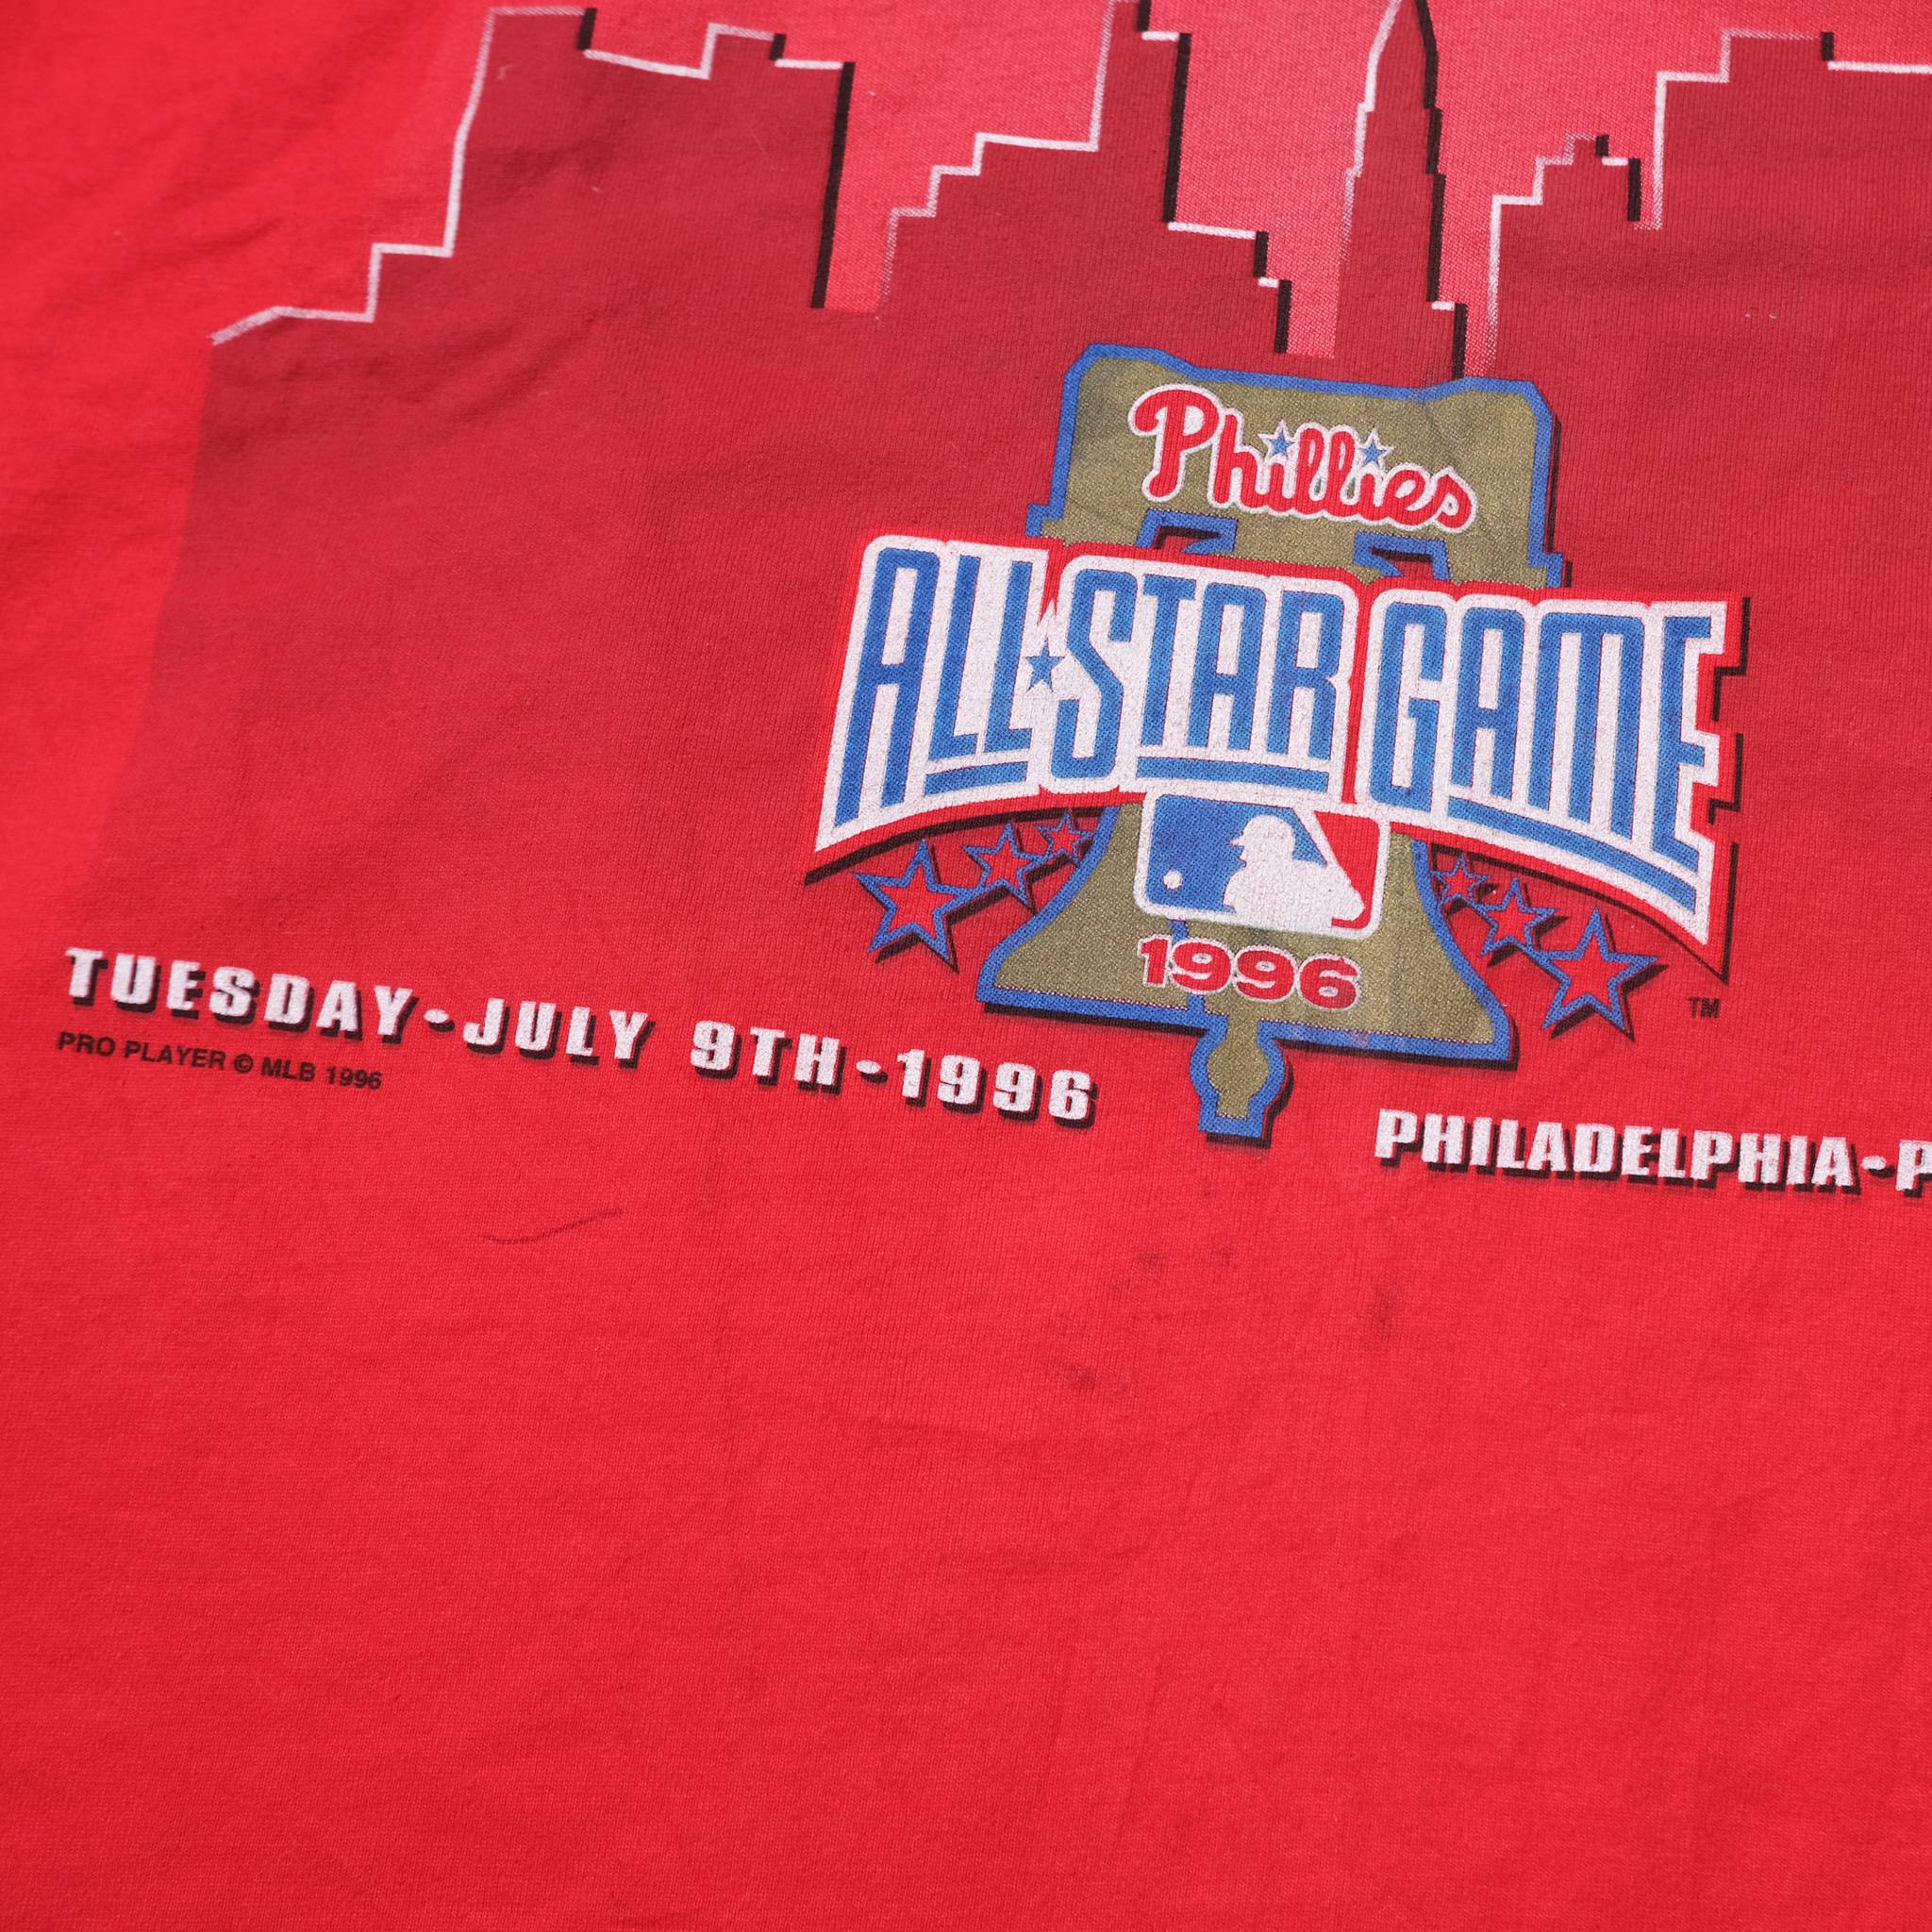 Phillies AllStar Games 1996